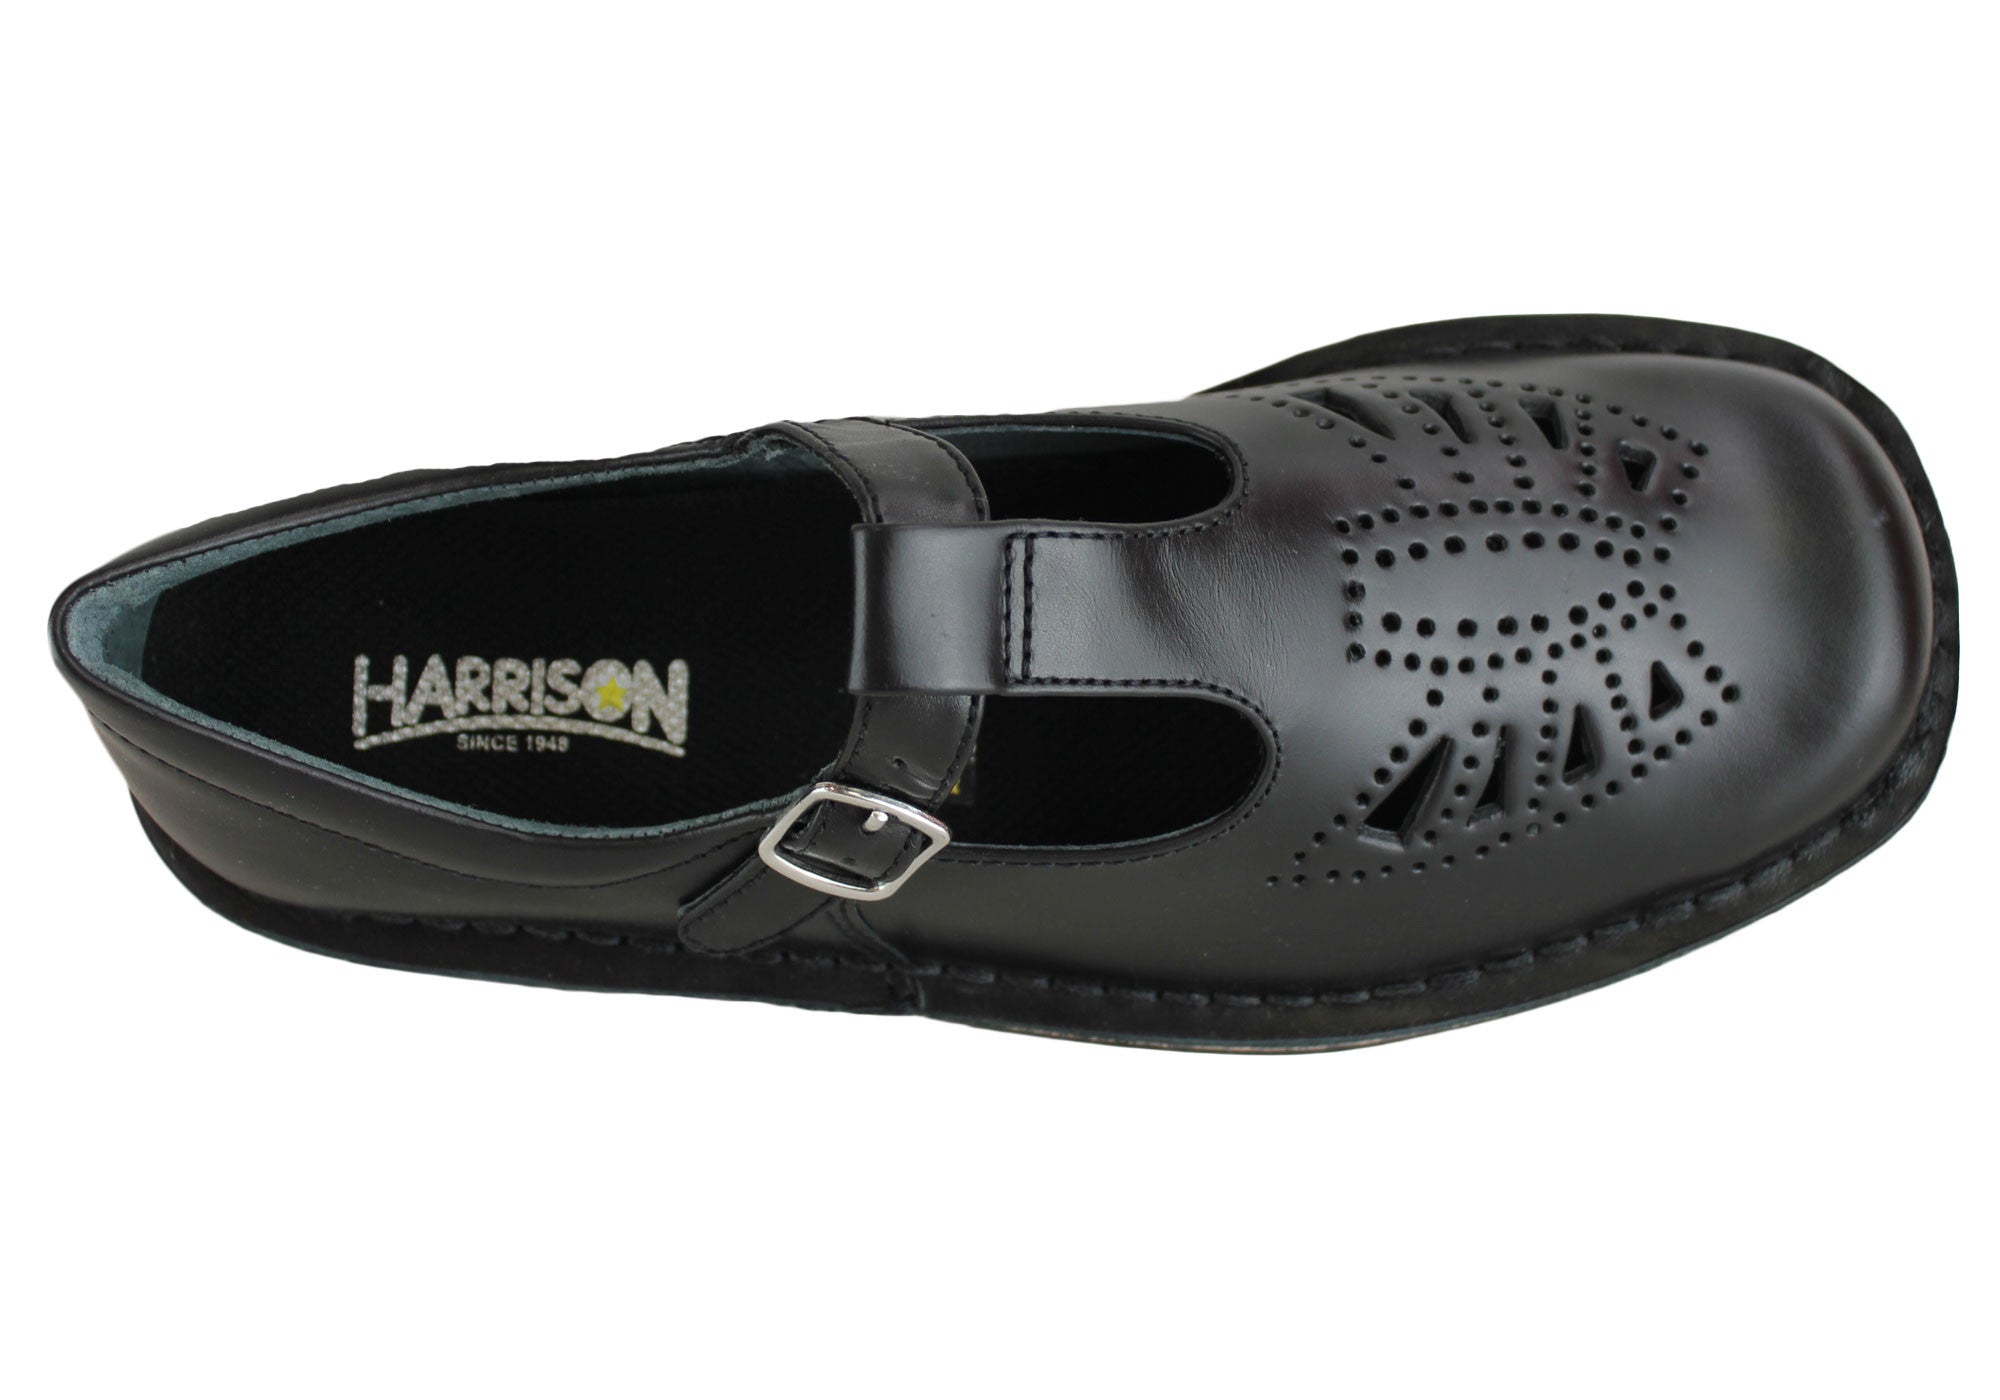 harrison school shoes sale